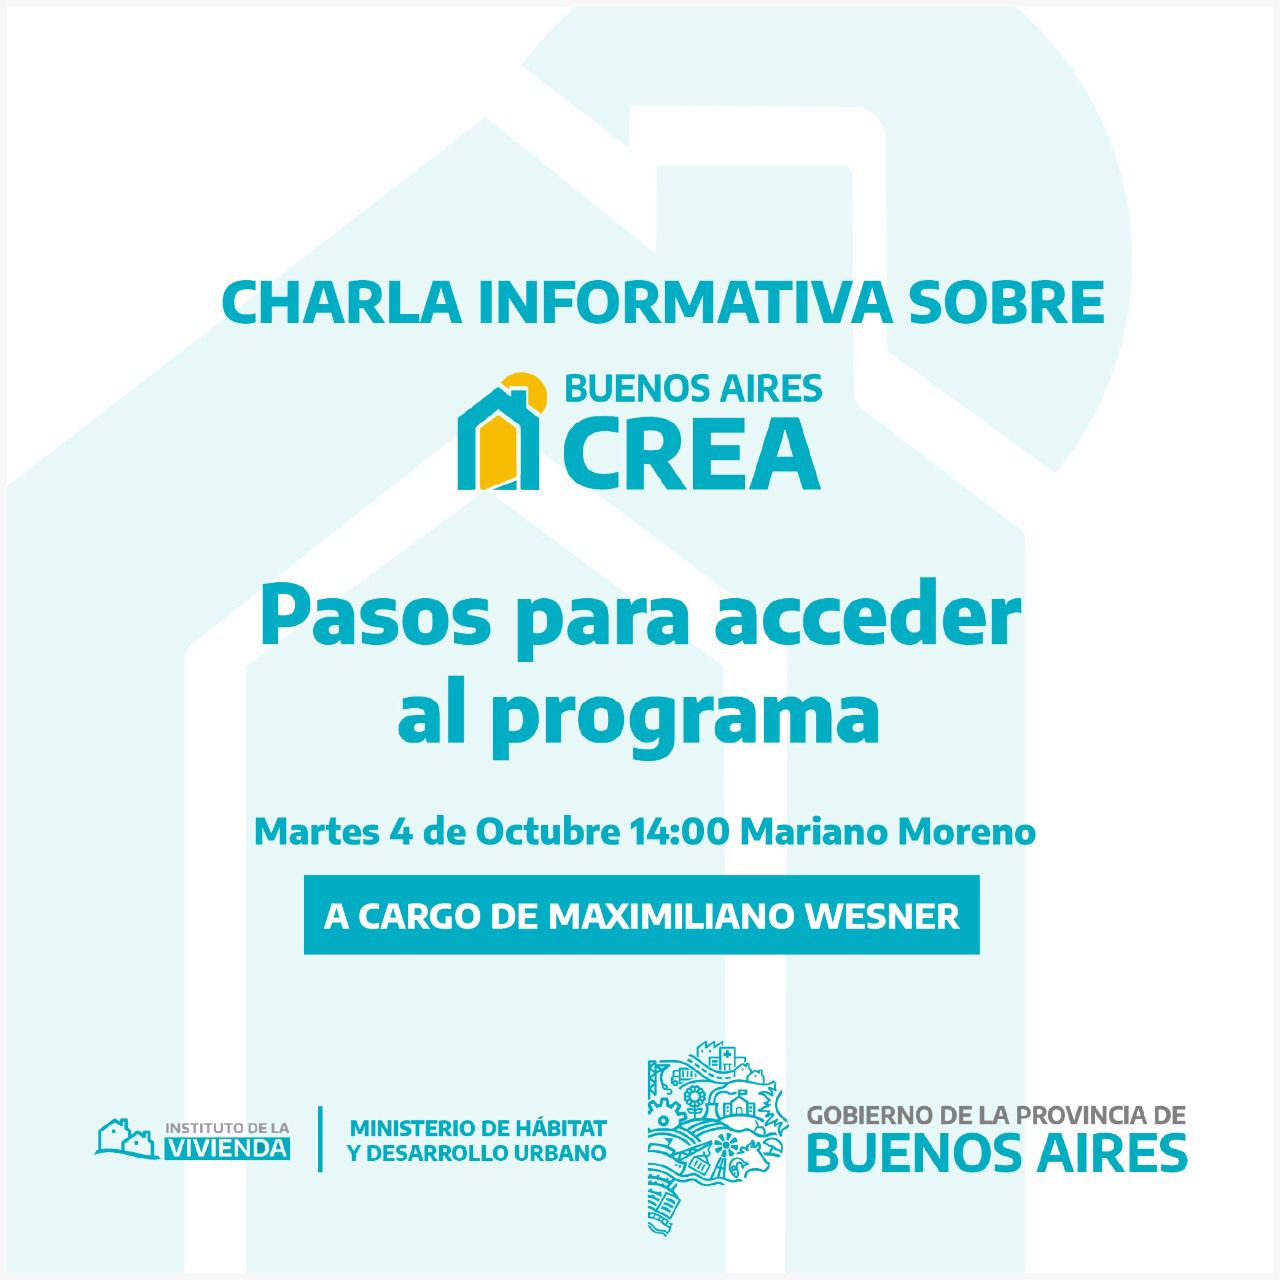 Buenos Aires CREA